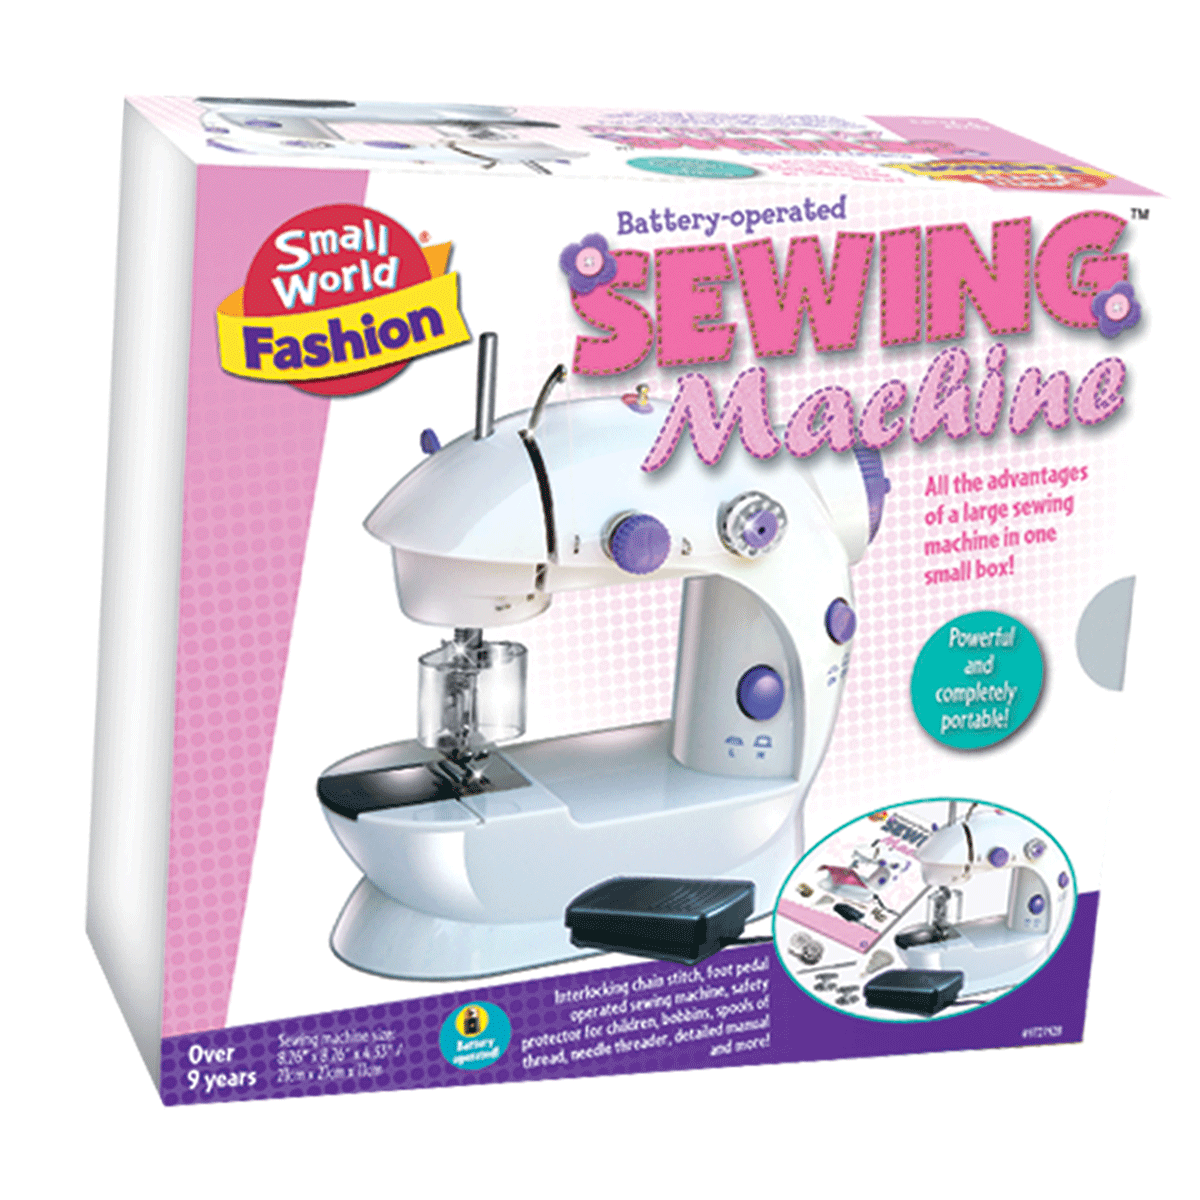 Sewing Machine - Craft sewing kit for kids